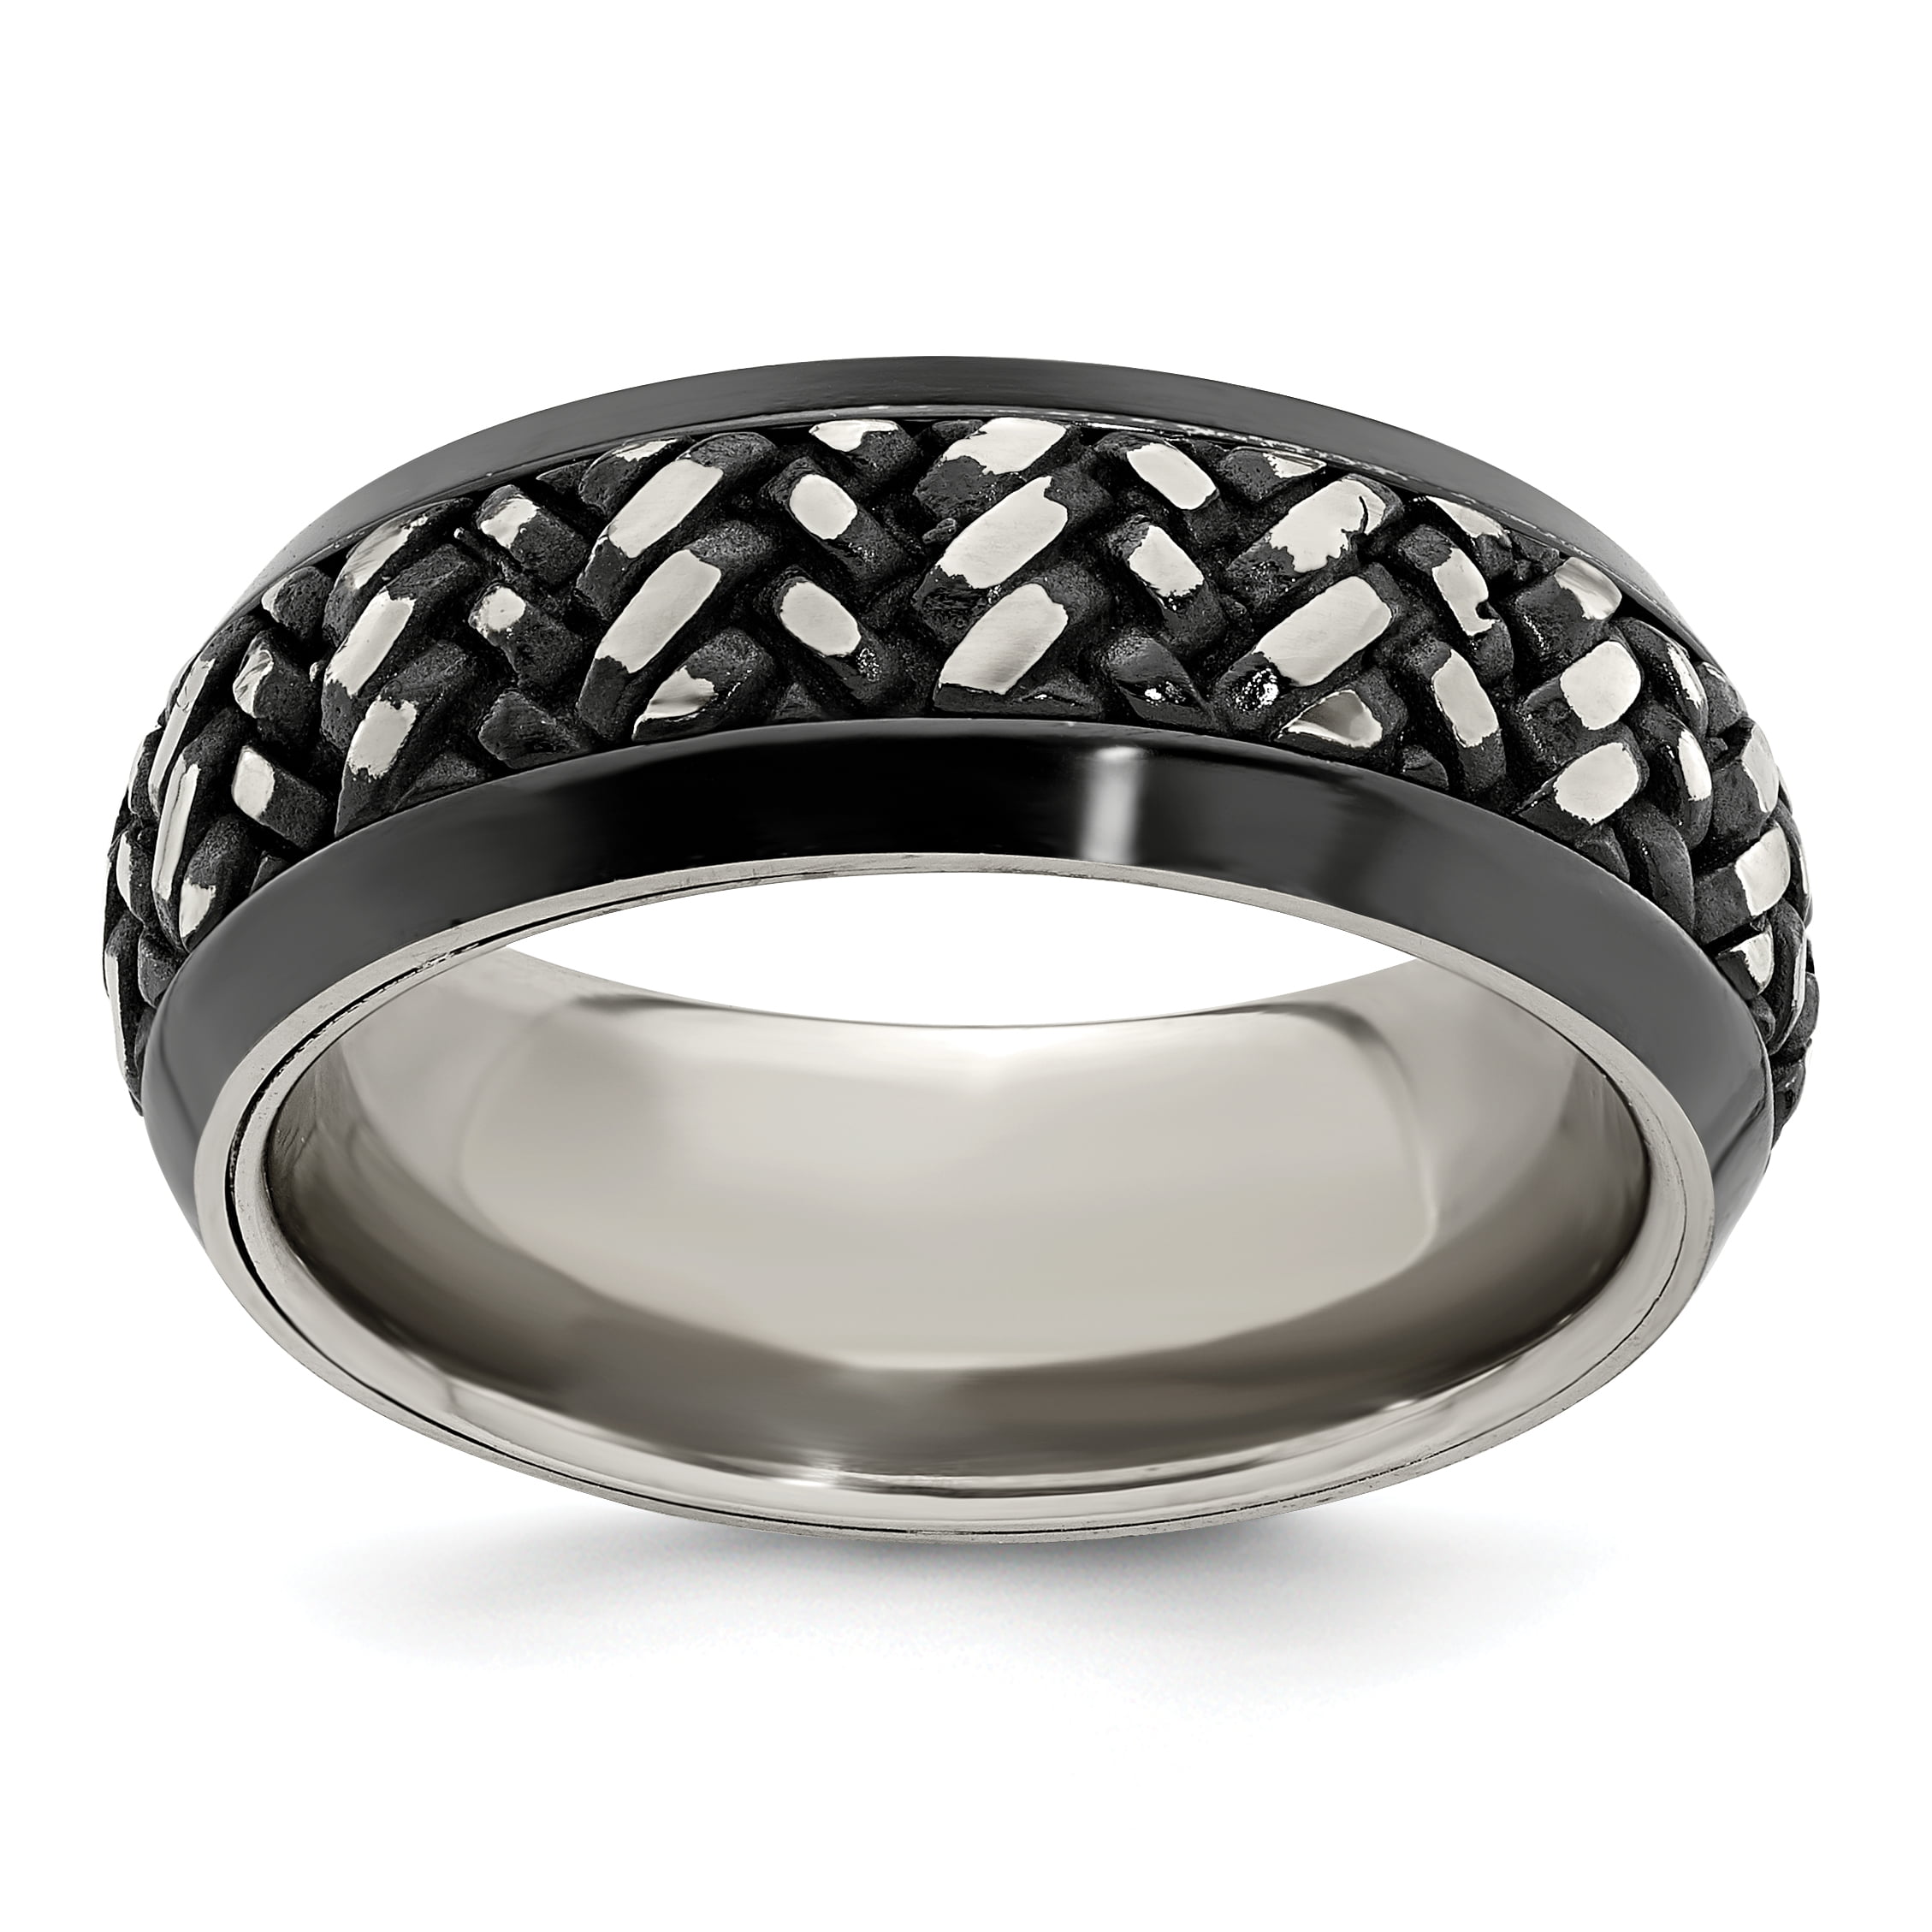 Edward Mirell Jewelry Collection Titanium Black Titanium Hammered 7mm Band Ring 